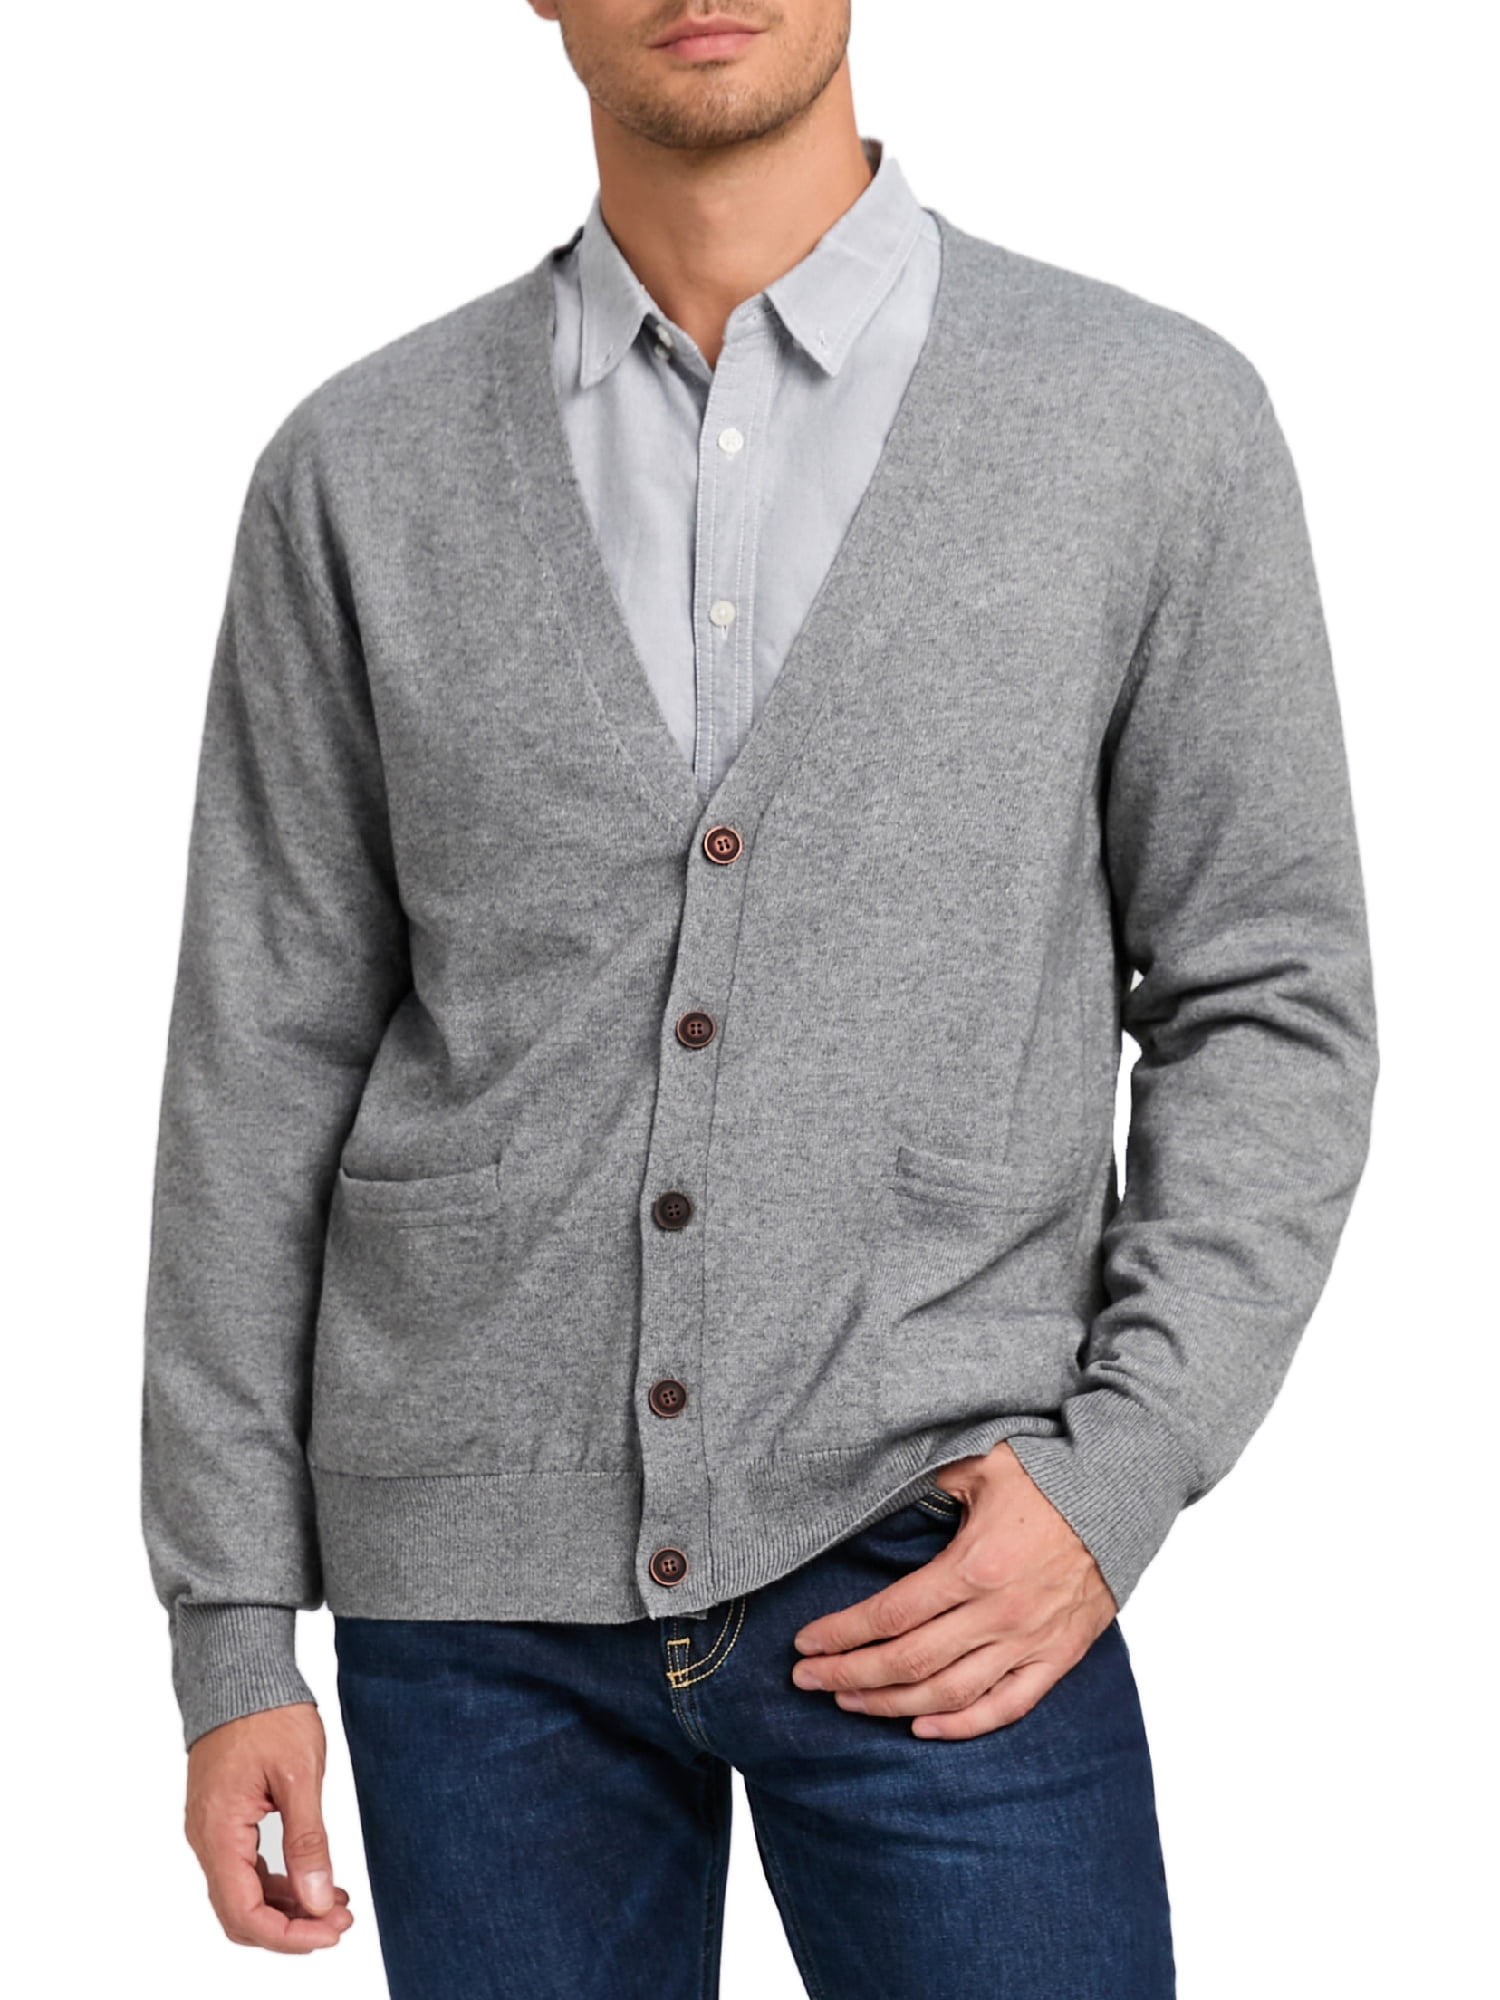 Kallspin Men’s Cardigan Sweater Cashmere Wool Blend V Neck Buttons ...